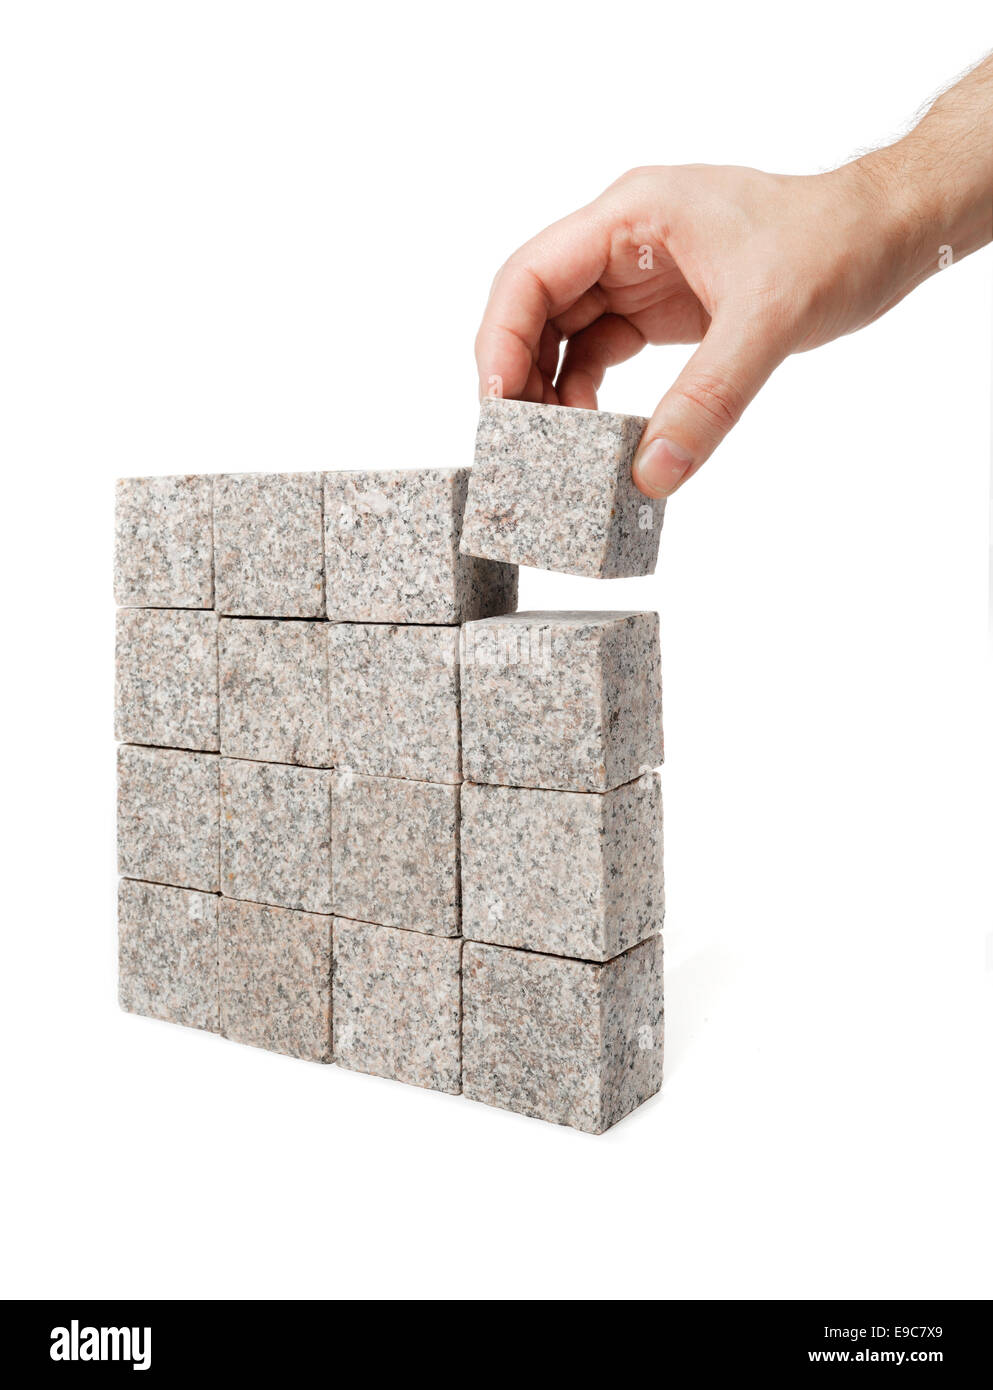 Man making a square shape of blocks made of granite rock. Stock Photo